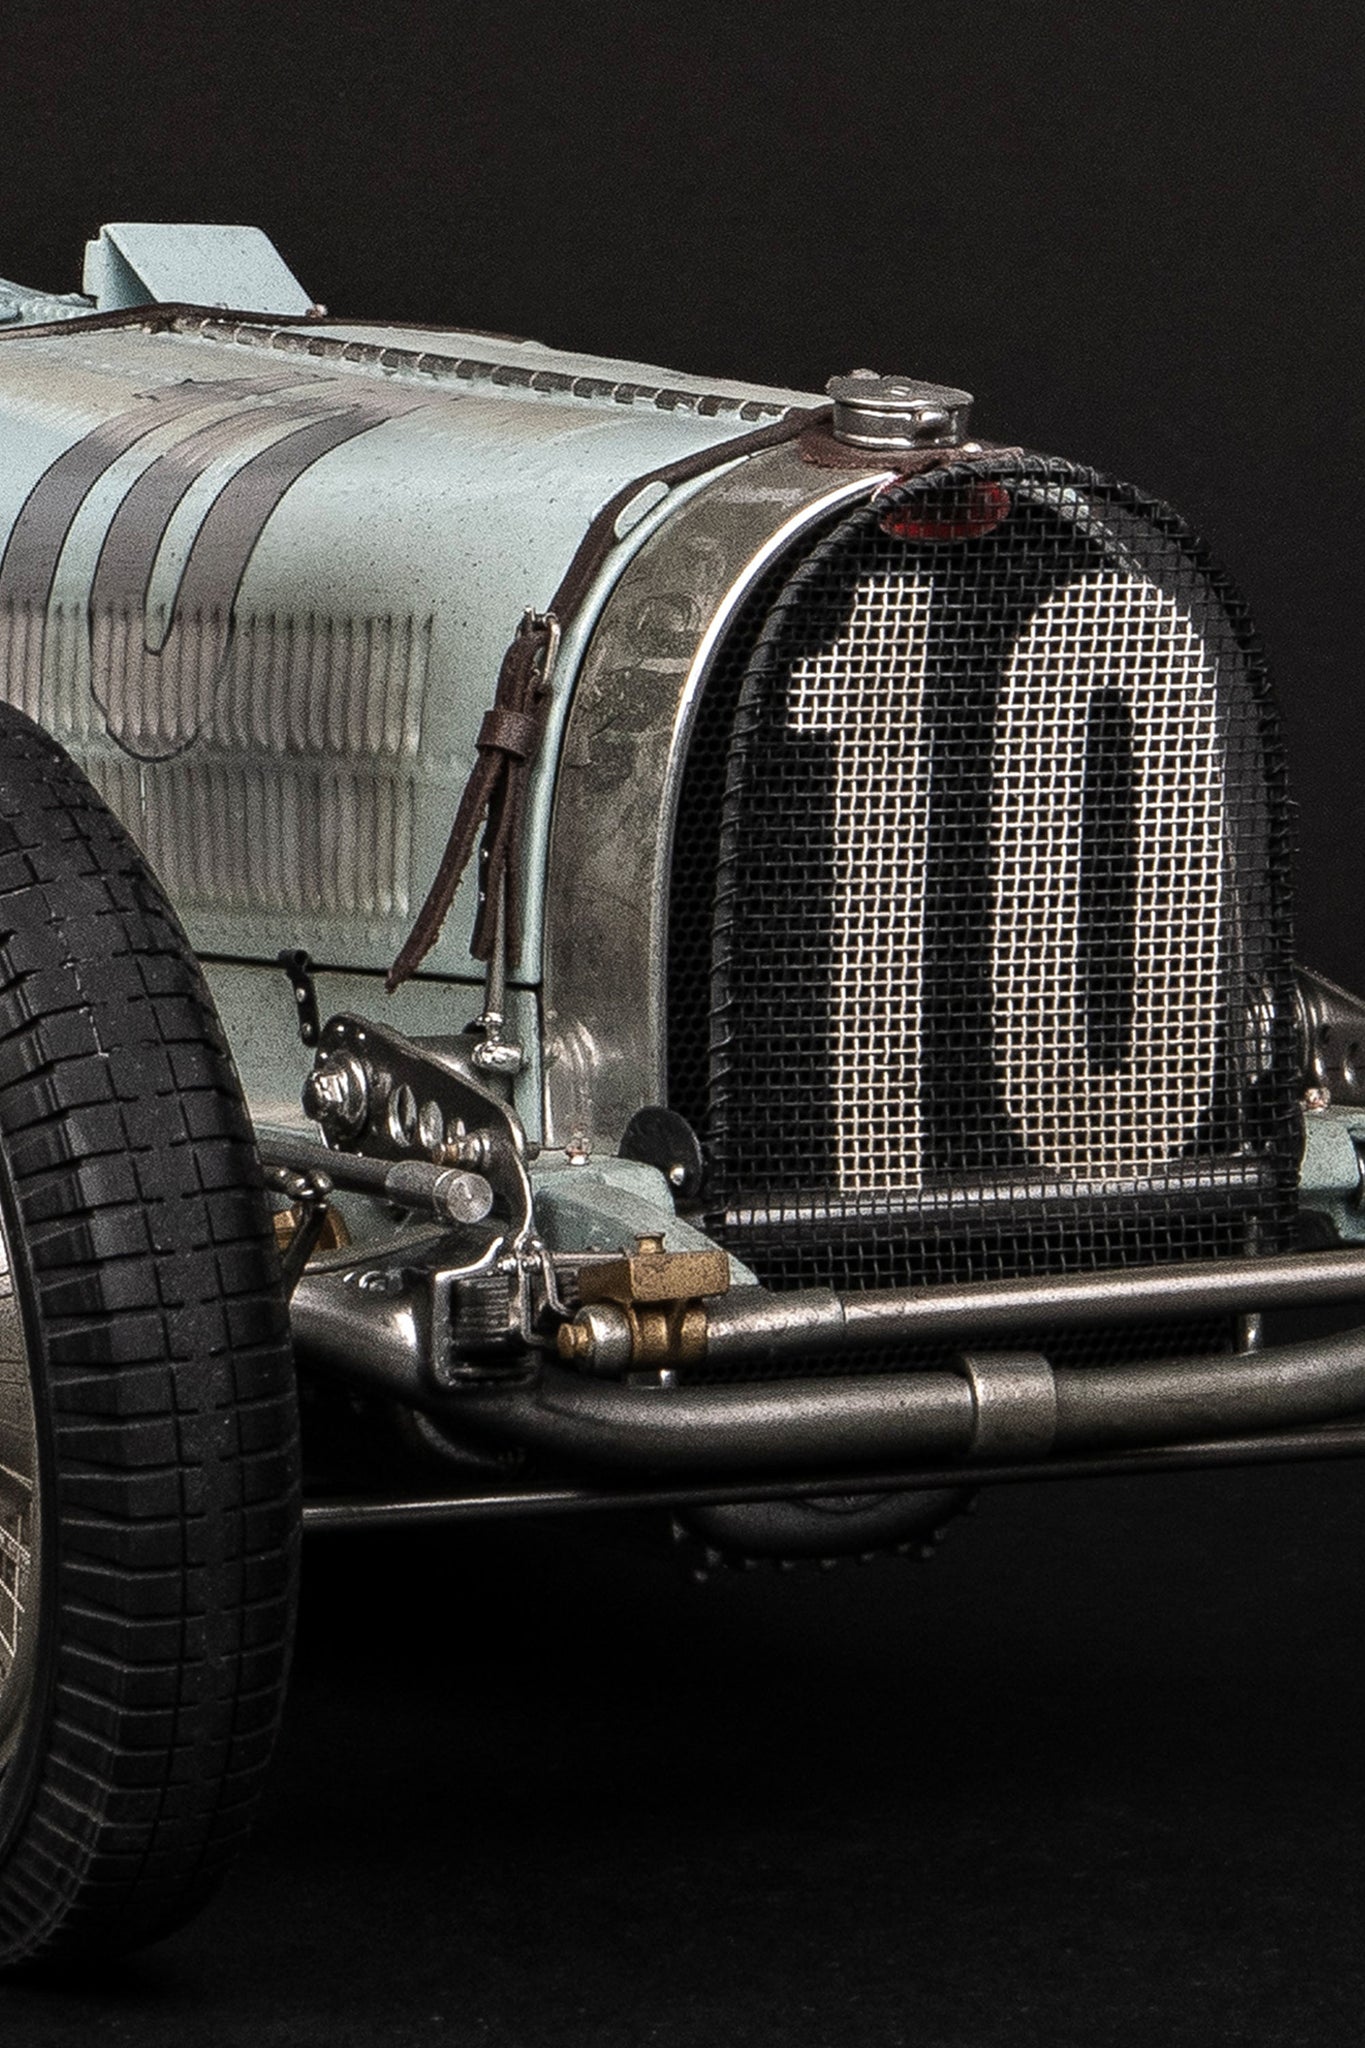 The Bugatti Type 59 Jean-Pierre Wimille Figure Edition